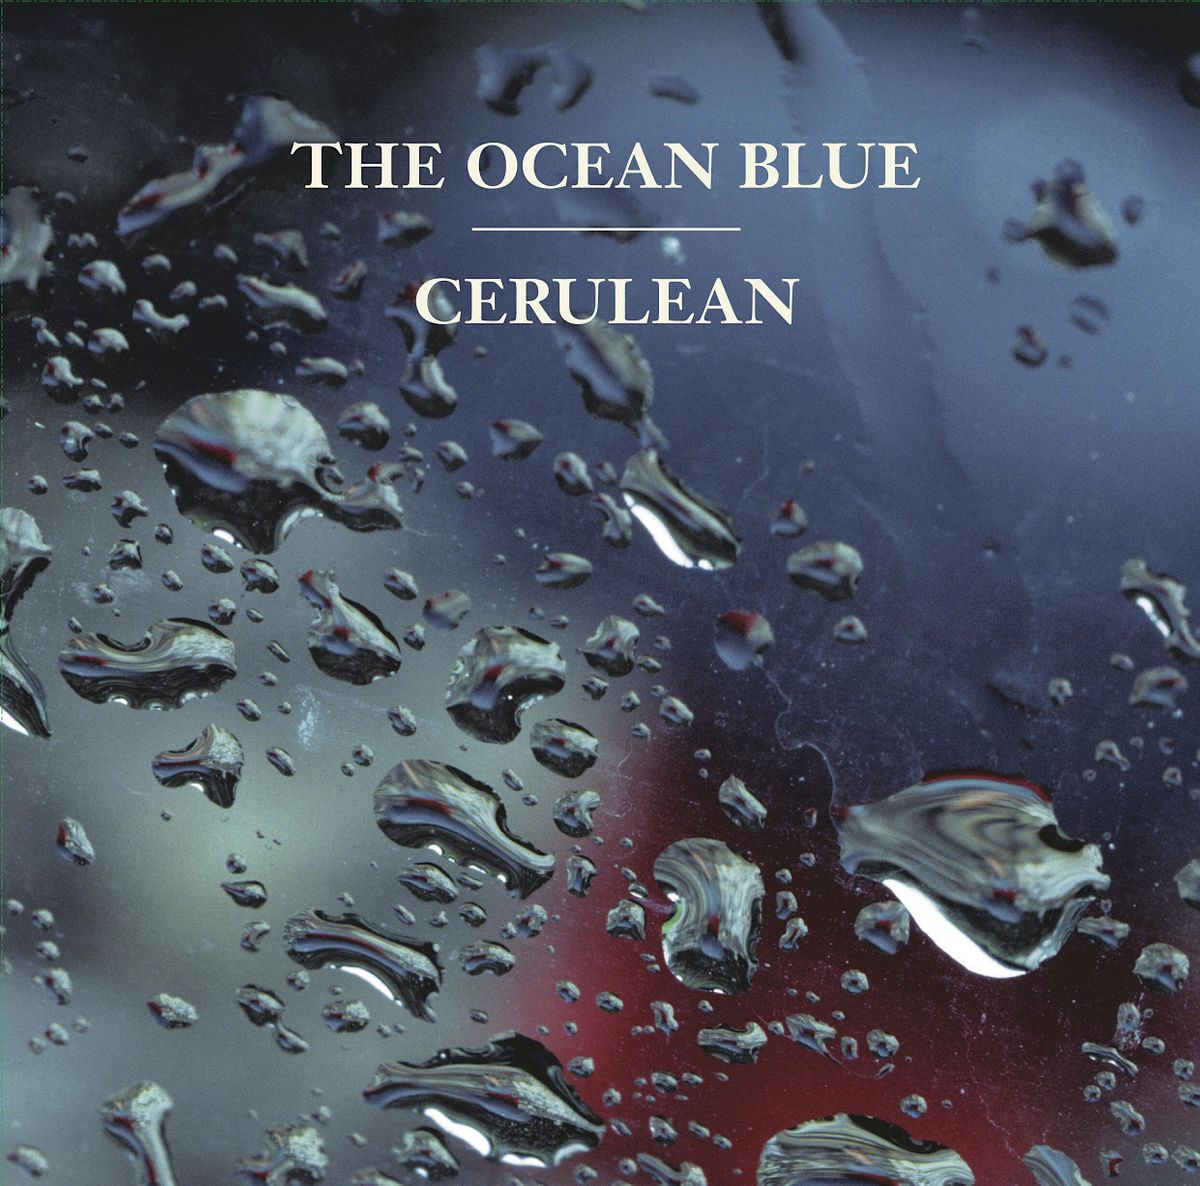 The Ocean Blue performing the Cerulean album - Tampa